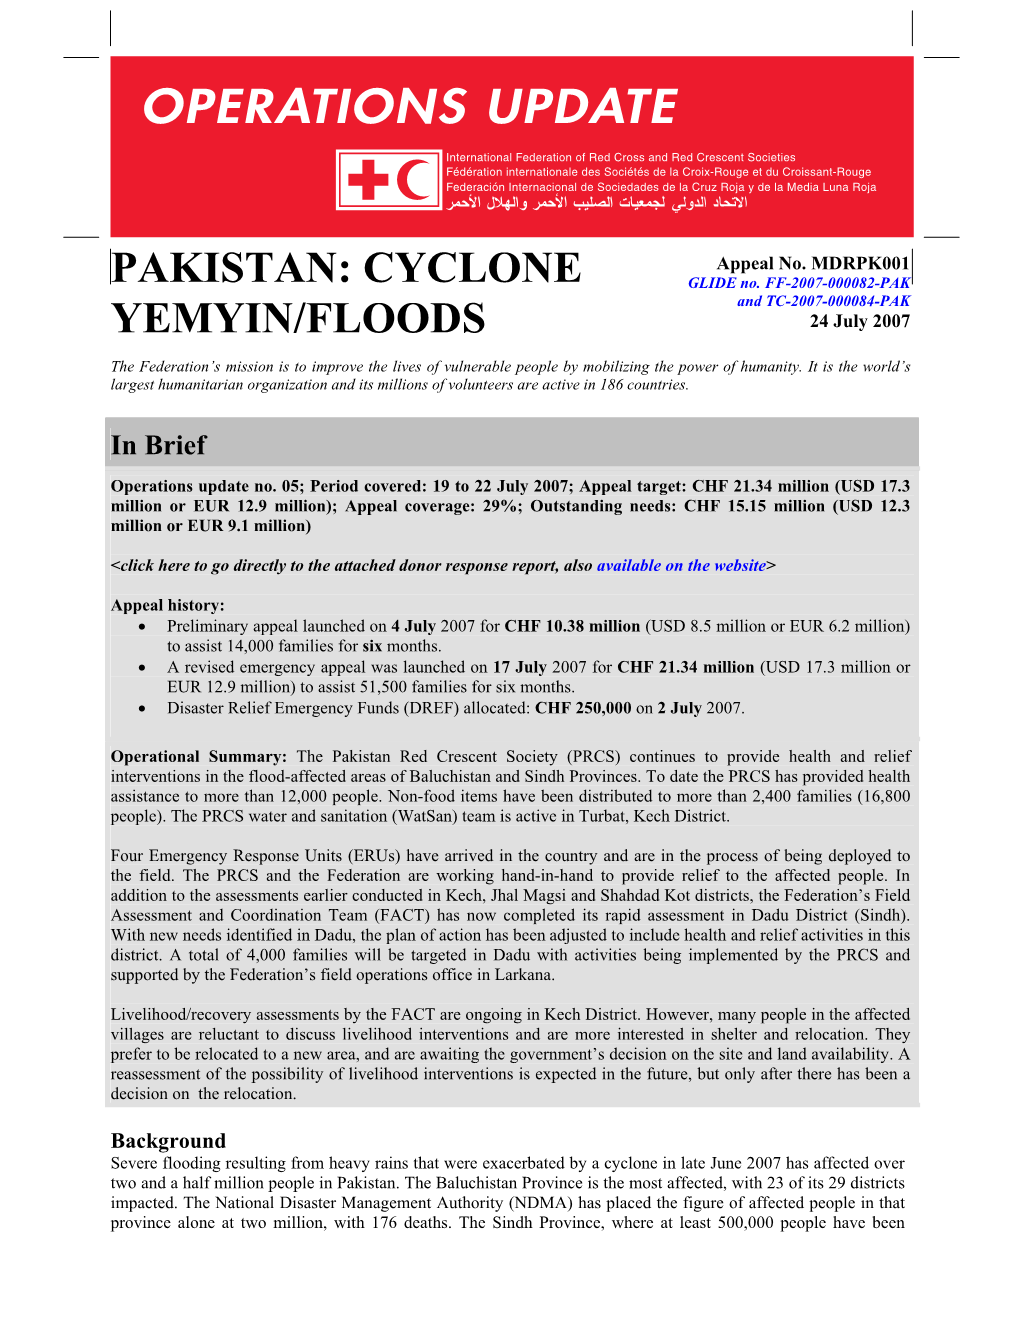 Pakistan: Cyclone Yemyin/Floods; Appeal No